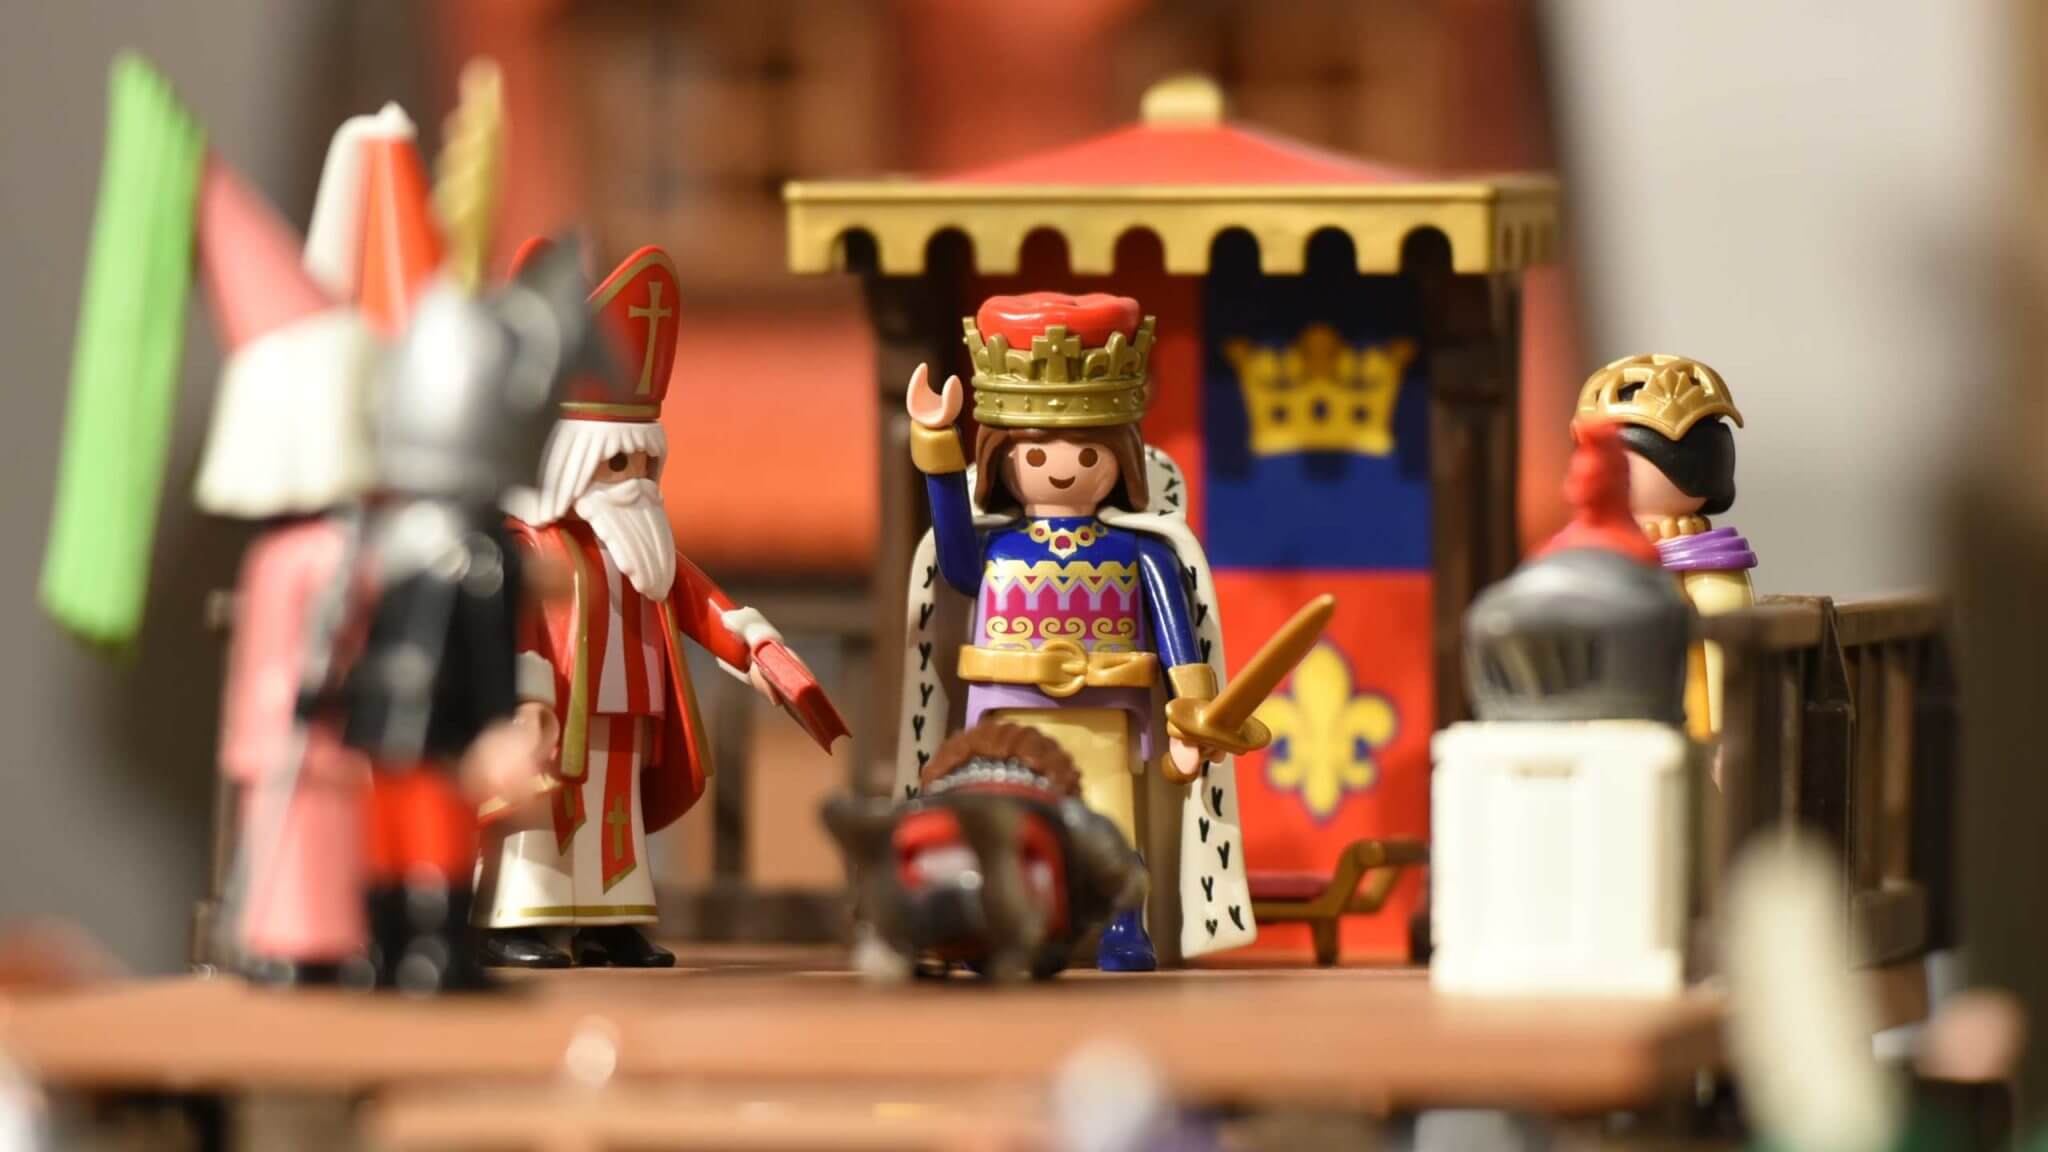 Playmobil medieval figures